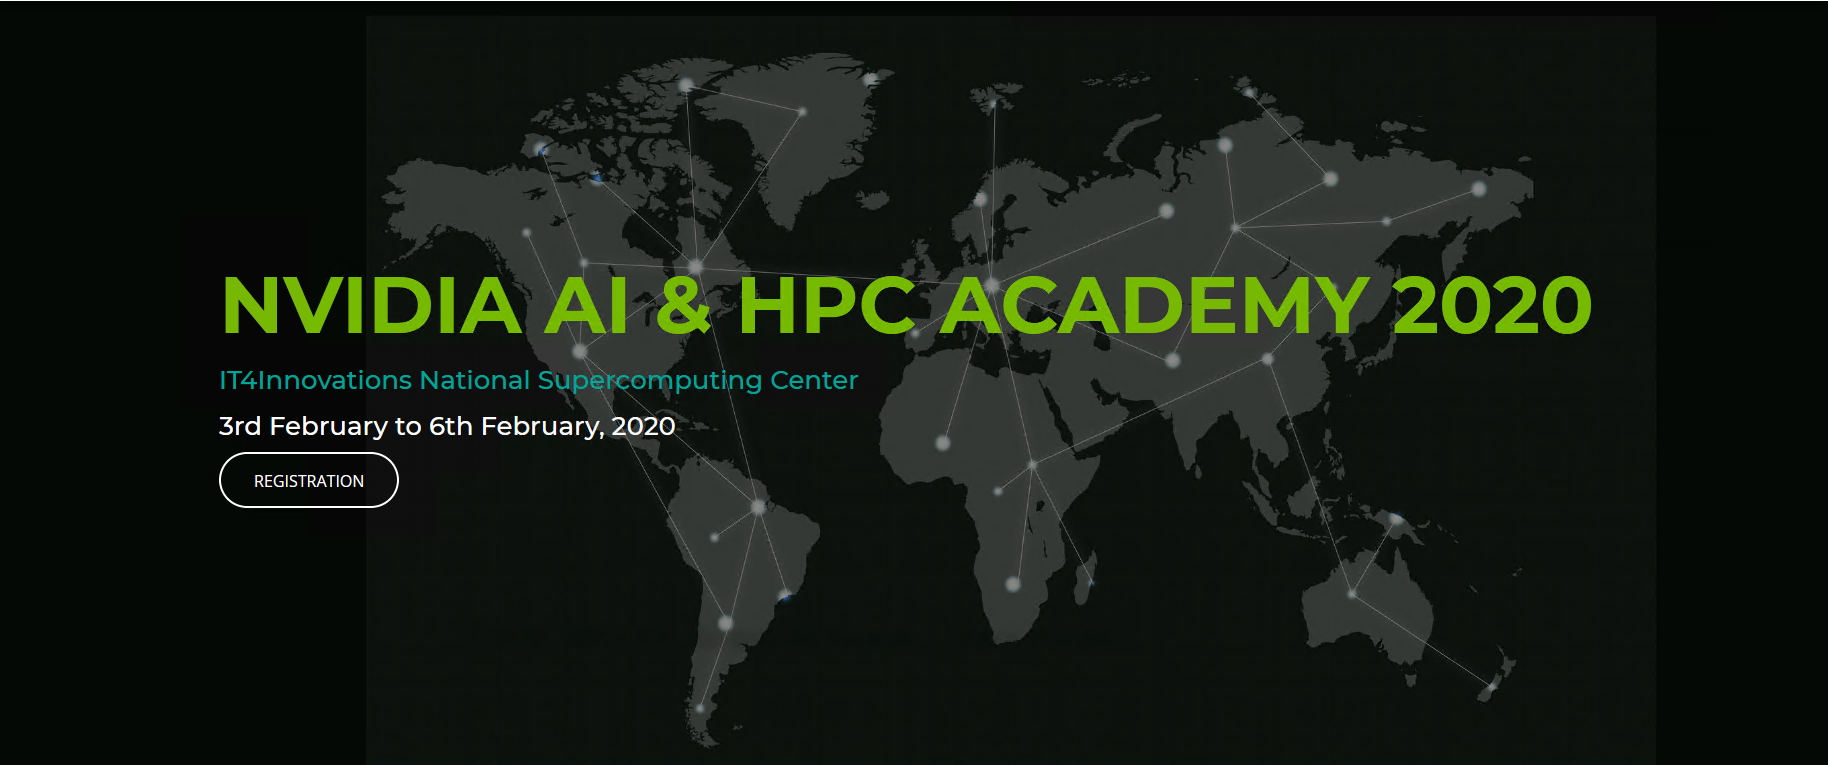 NVIDIA AI & HPC ACADEMY